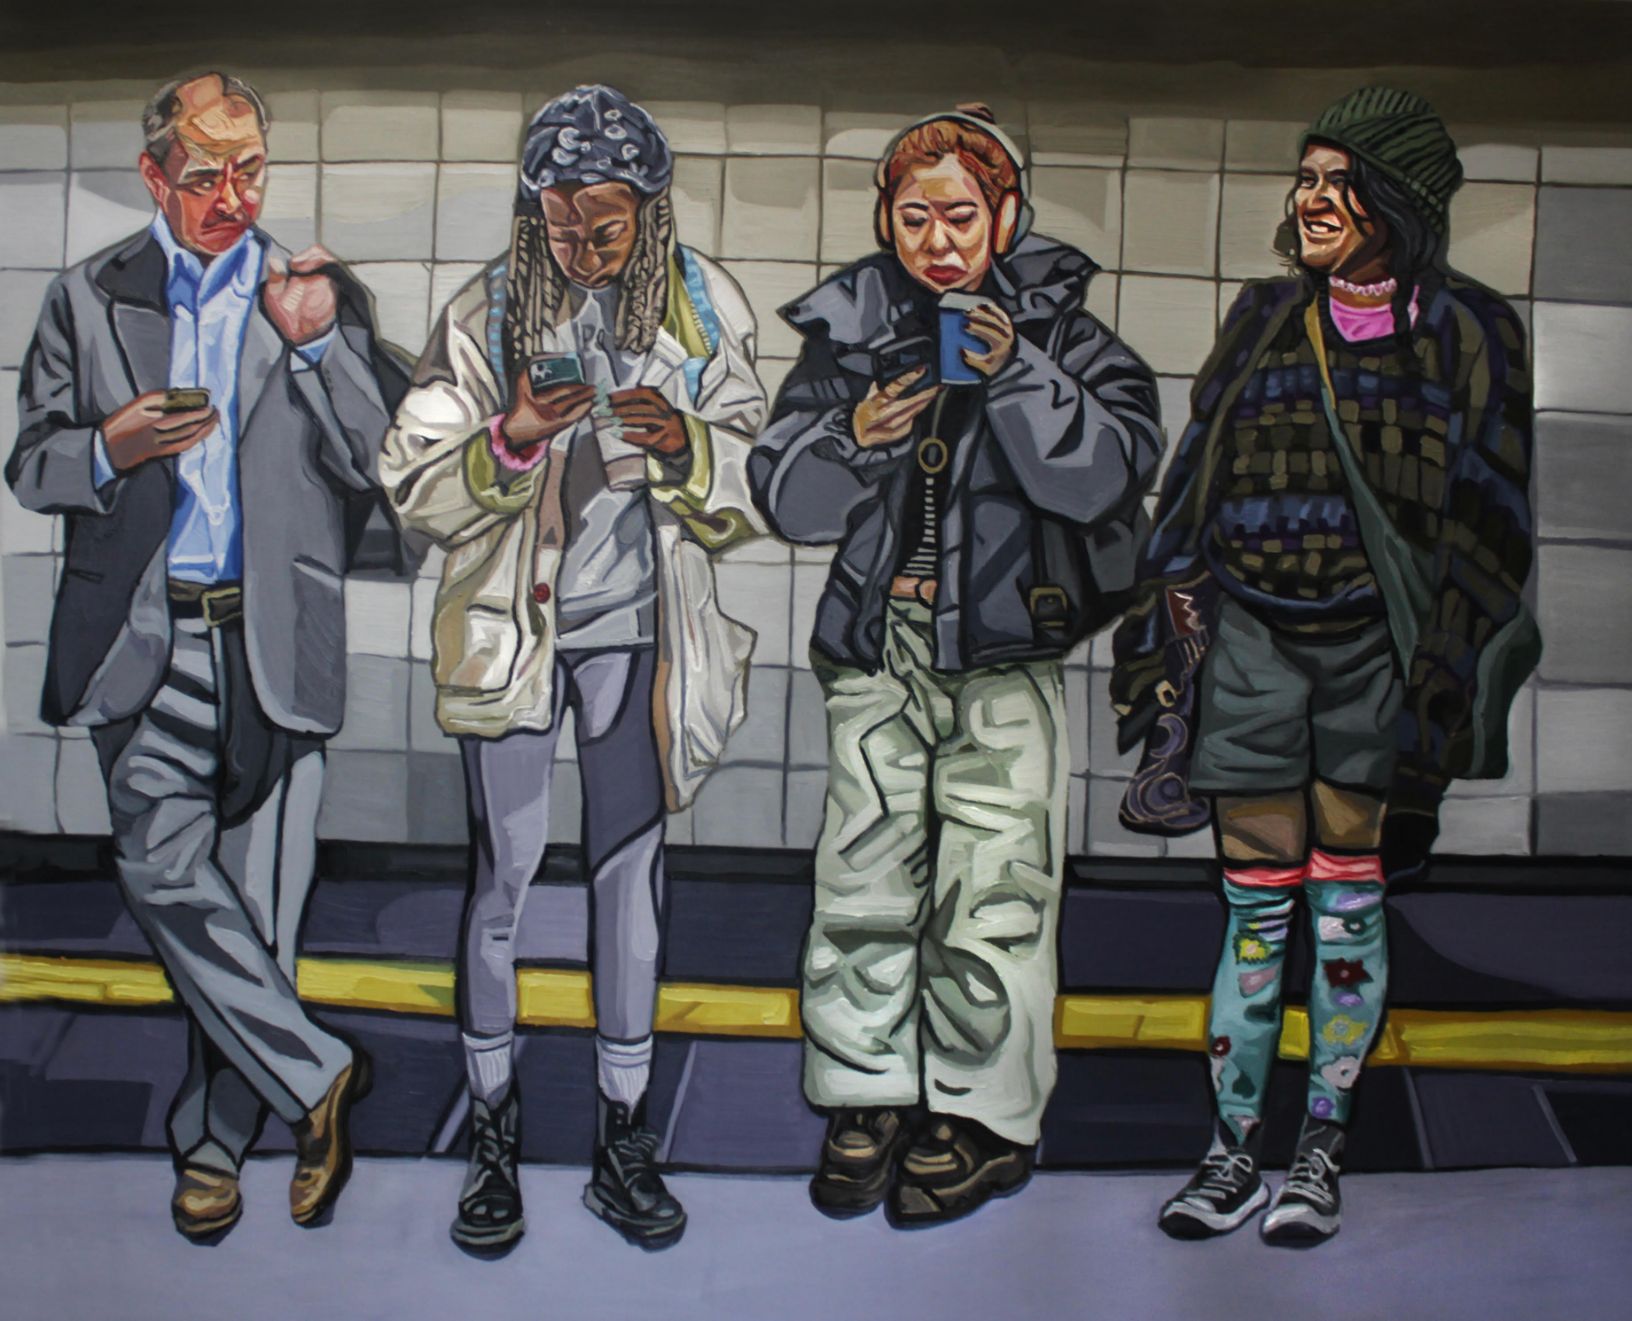 London Underground paintings Emily Gillbanks